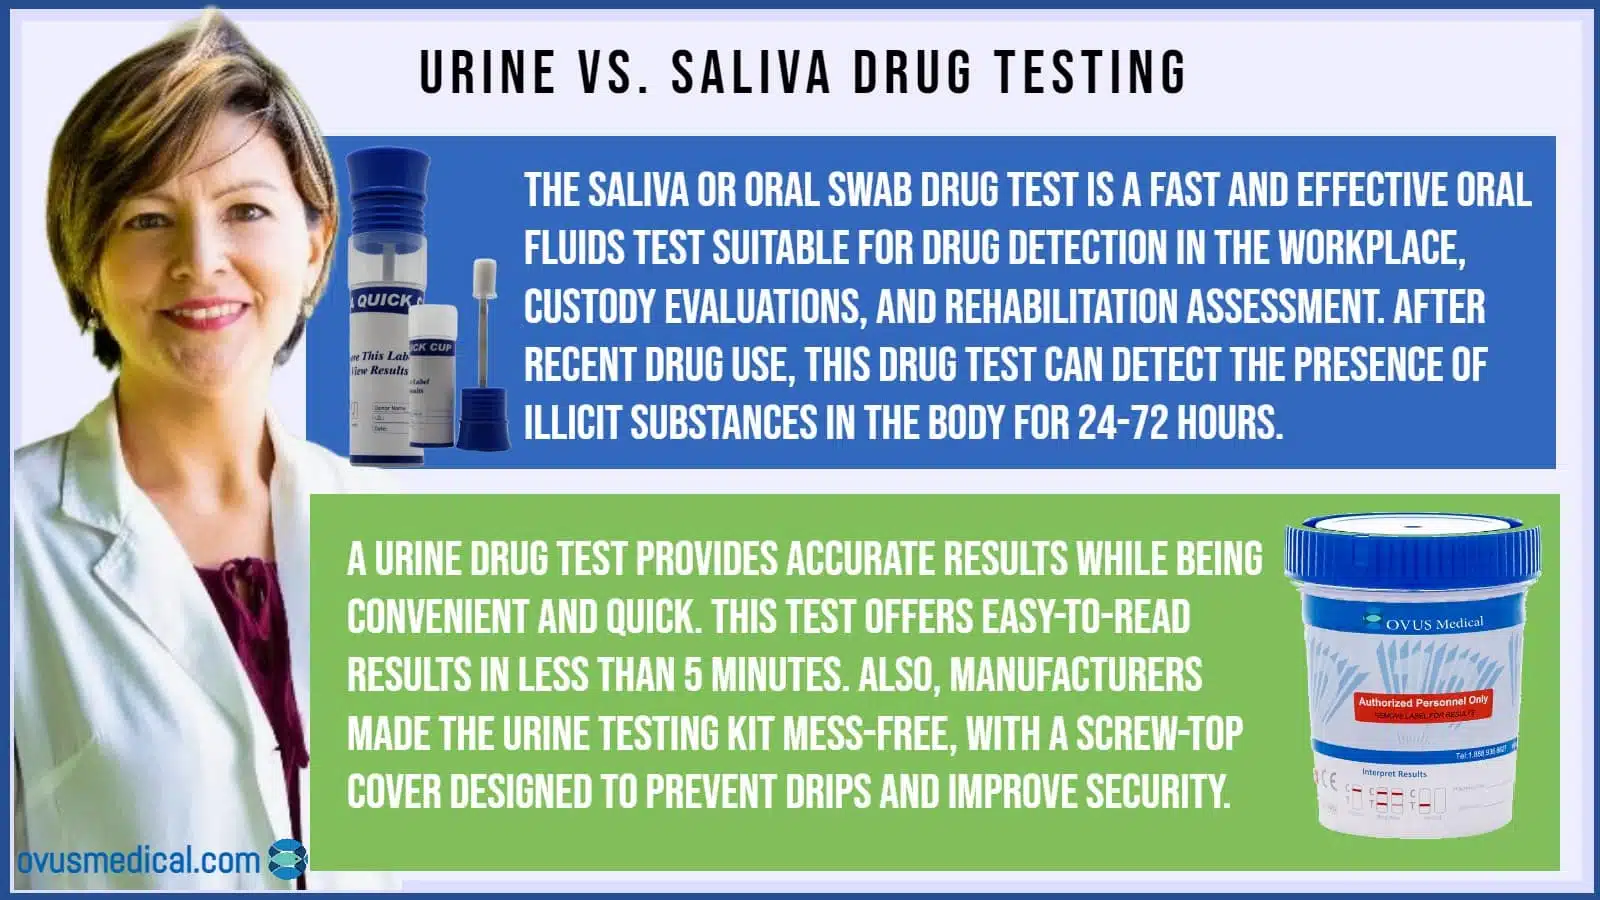 ovus medical Urine vs. Saliva Drug Testing